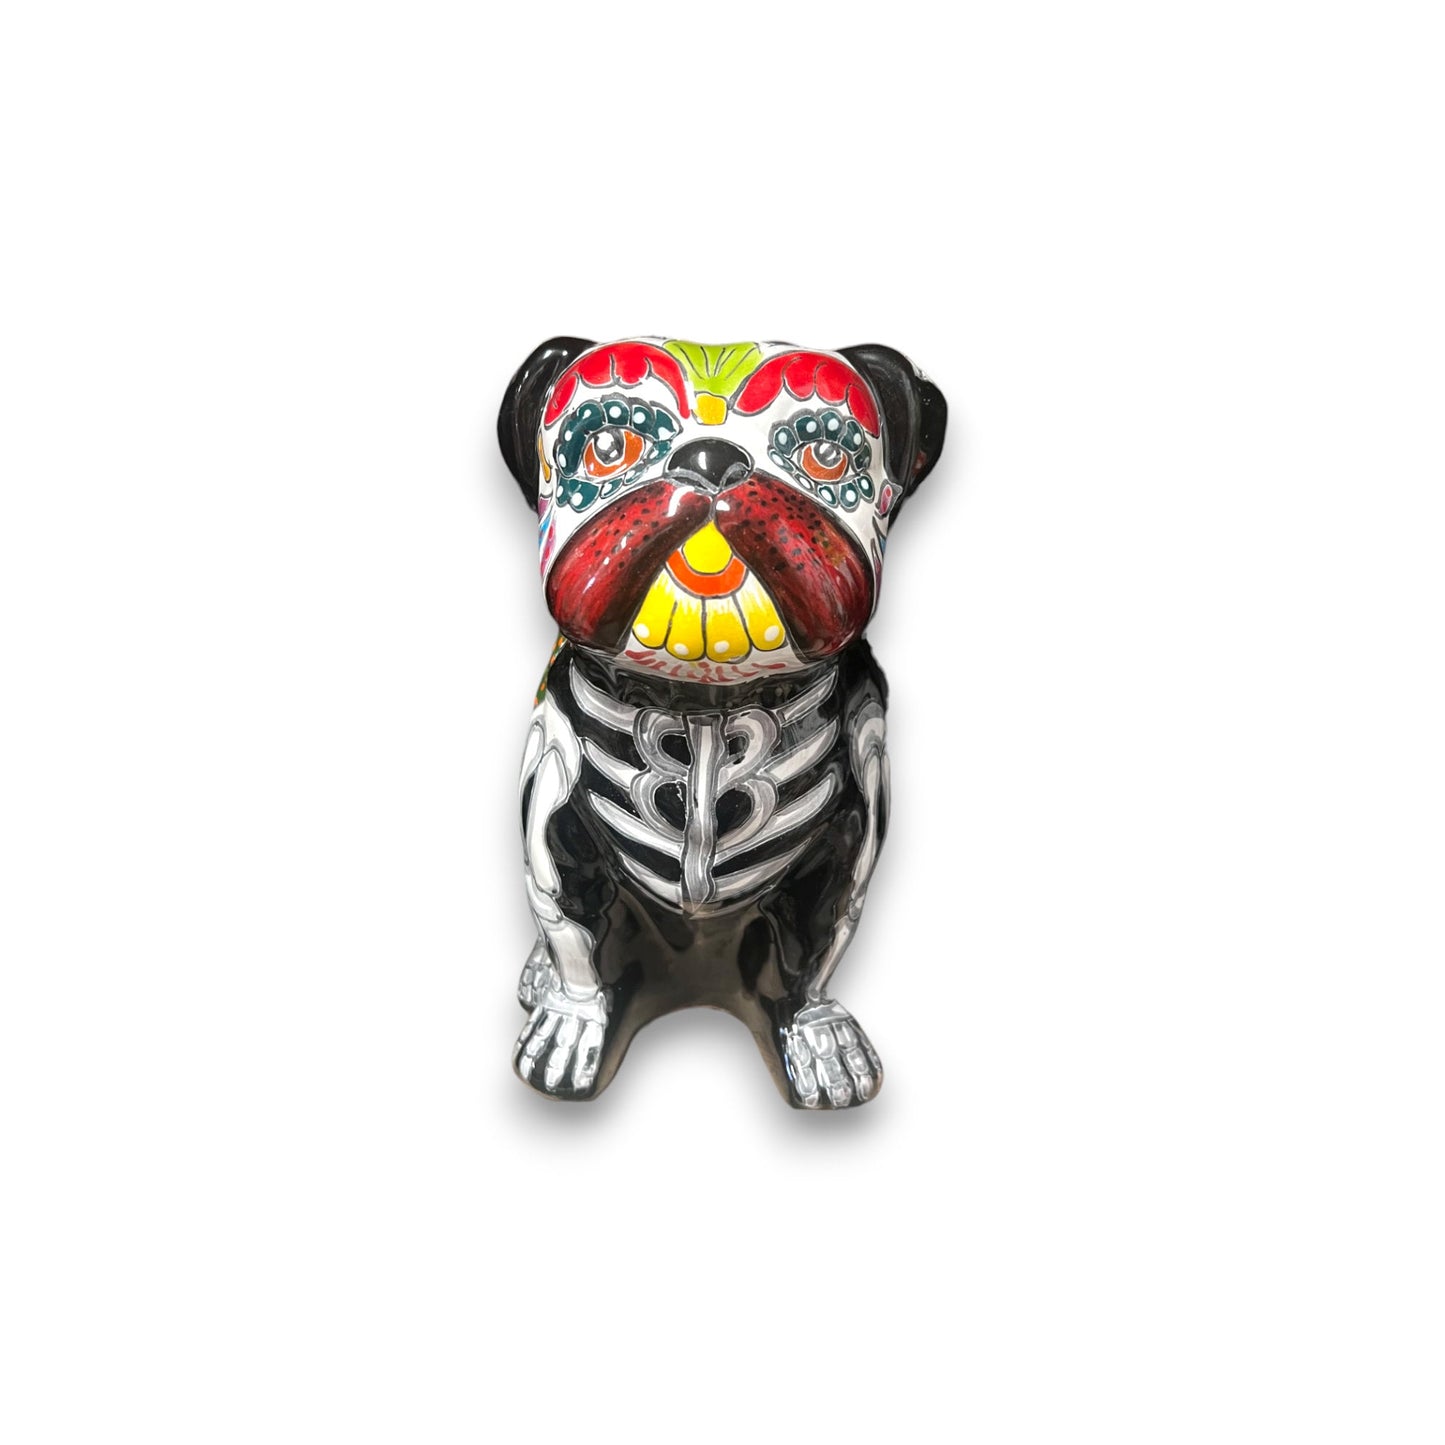 Handmade Talavera Pug Figurine | Colorful Day of the Dead Decor (Medium)